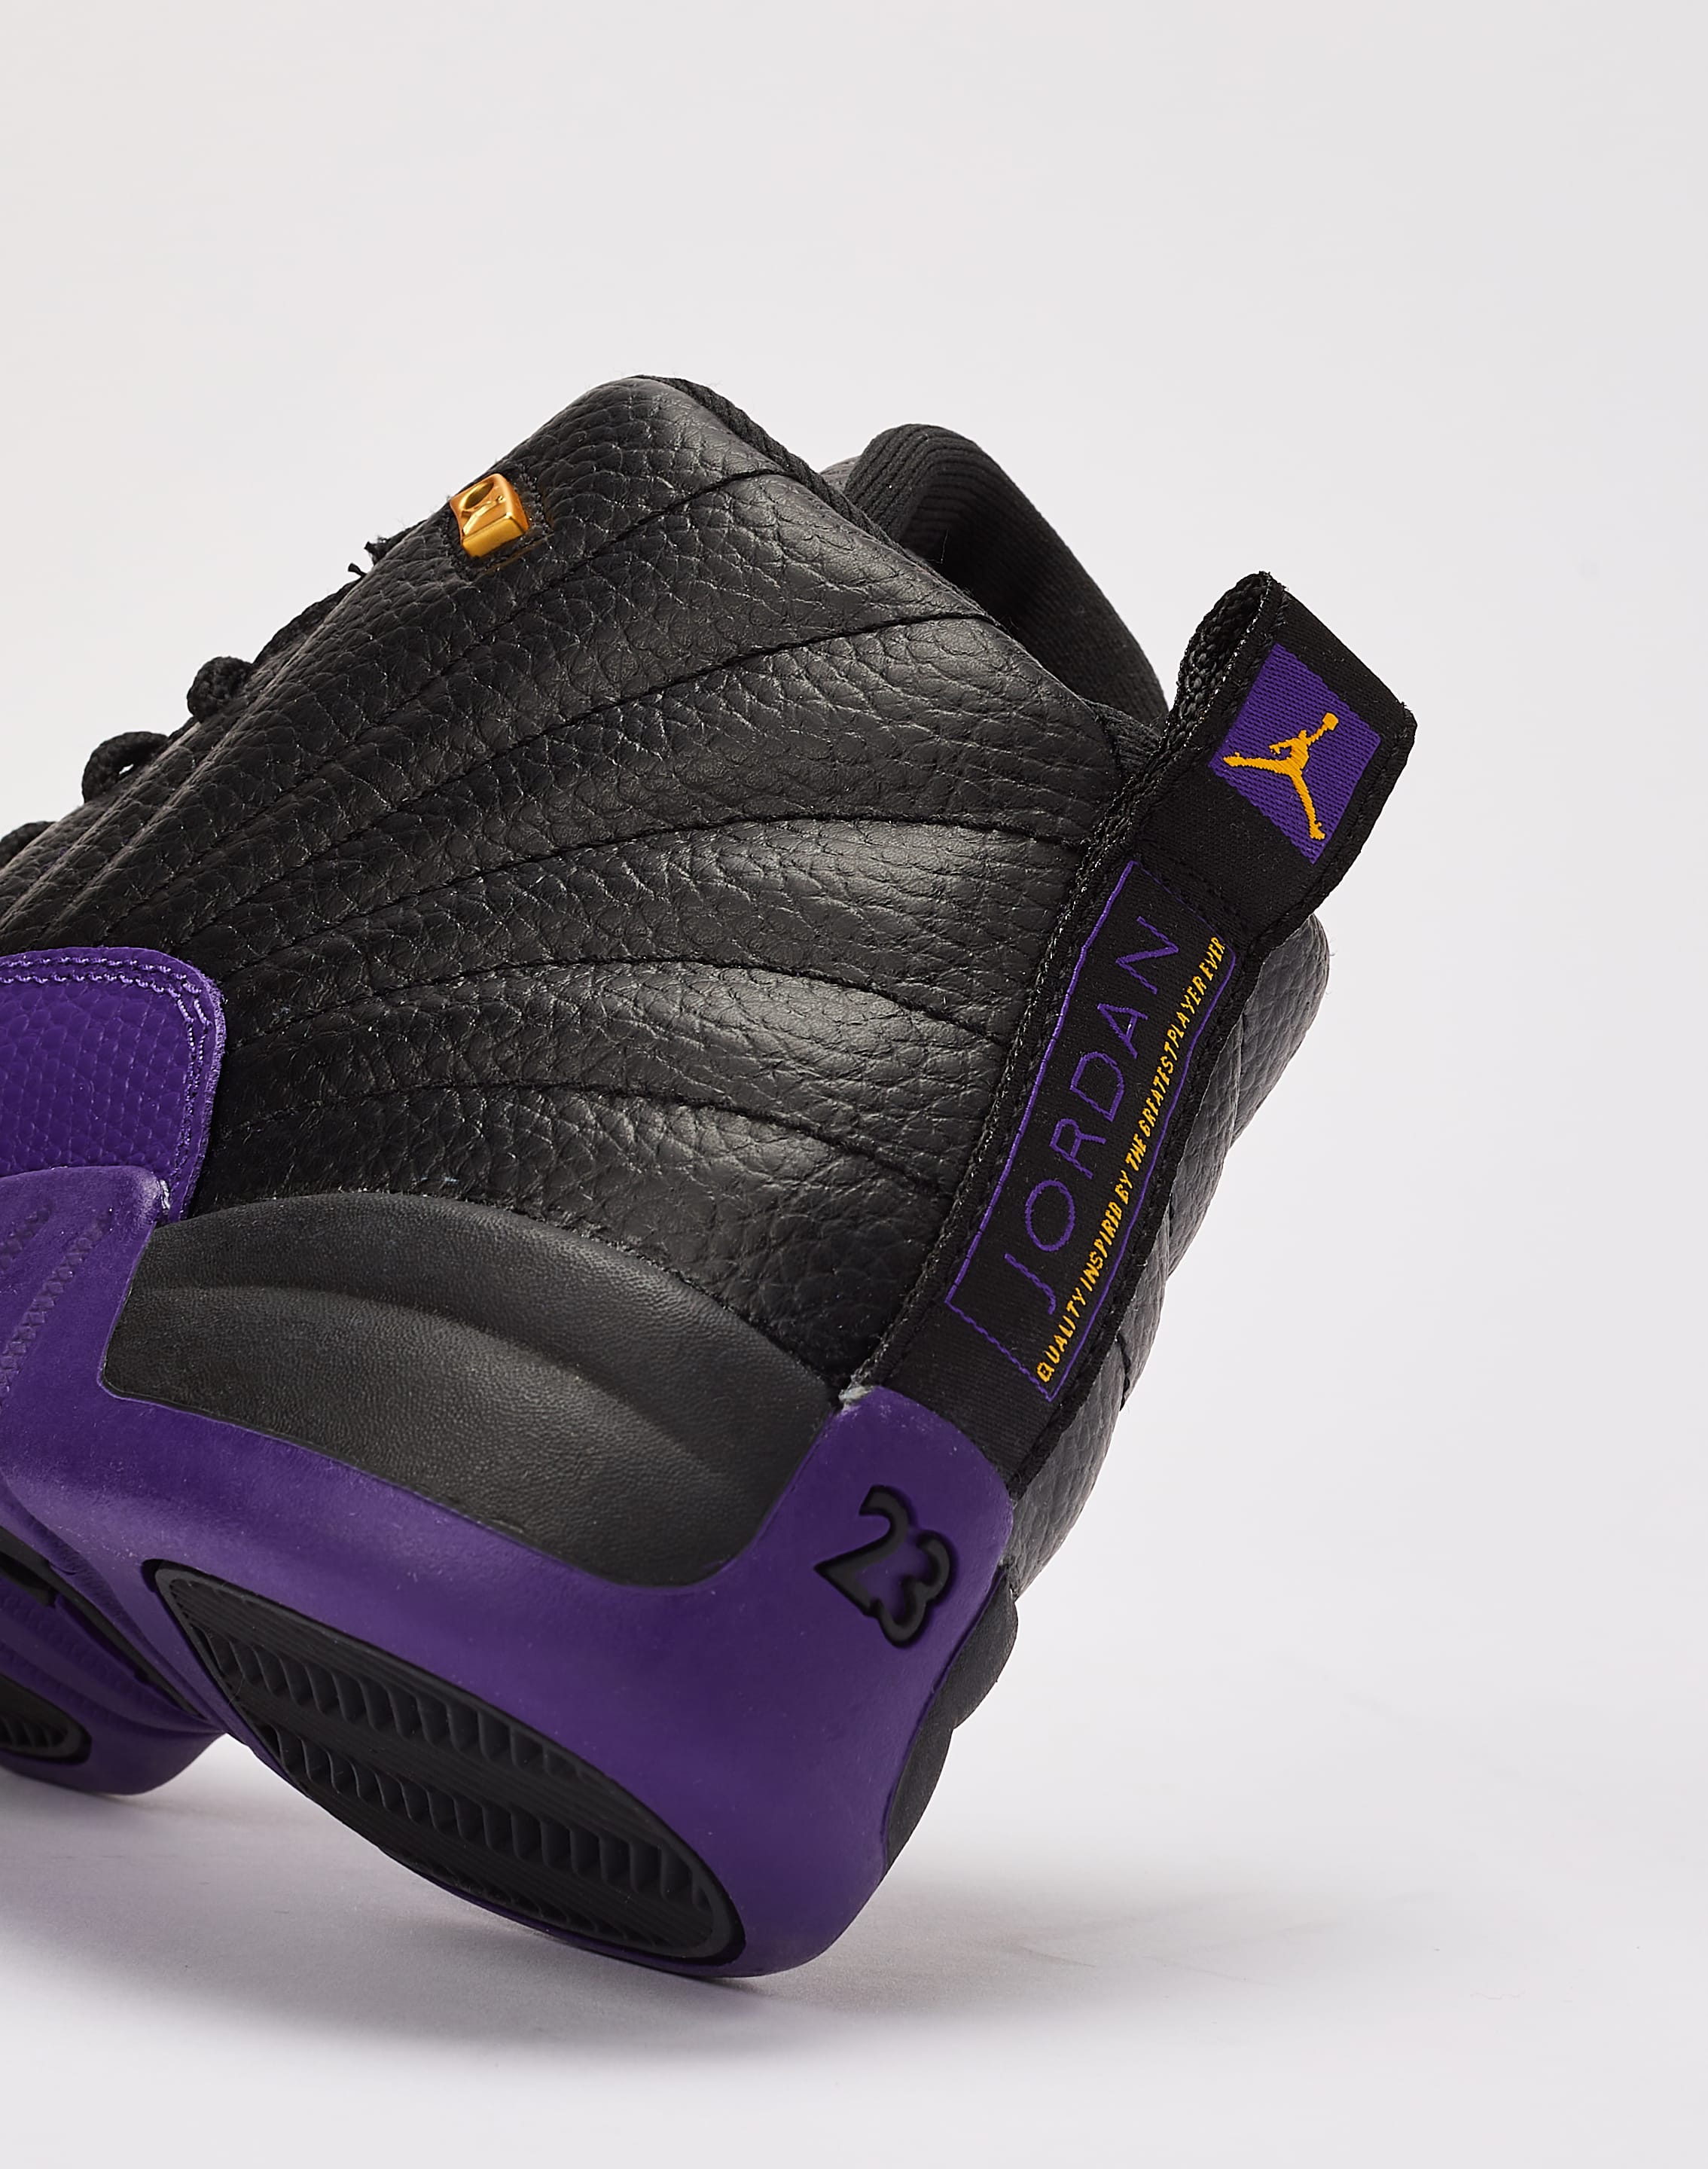 Jordan Air Jordan 12 Retro Field Purple Preschool Lifestyle Shoes Black  Purp 151186-057 – Shoe Palace